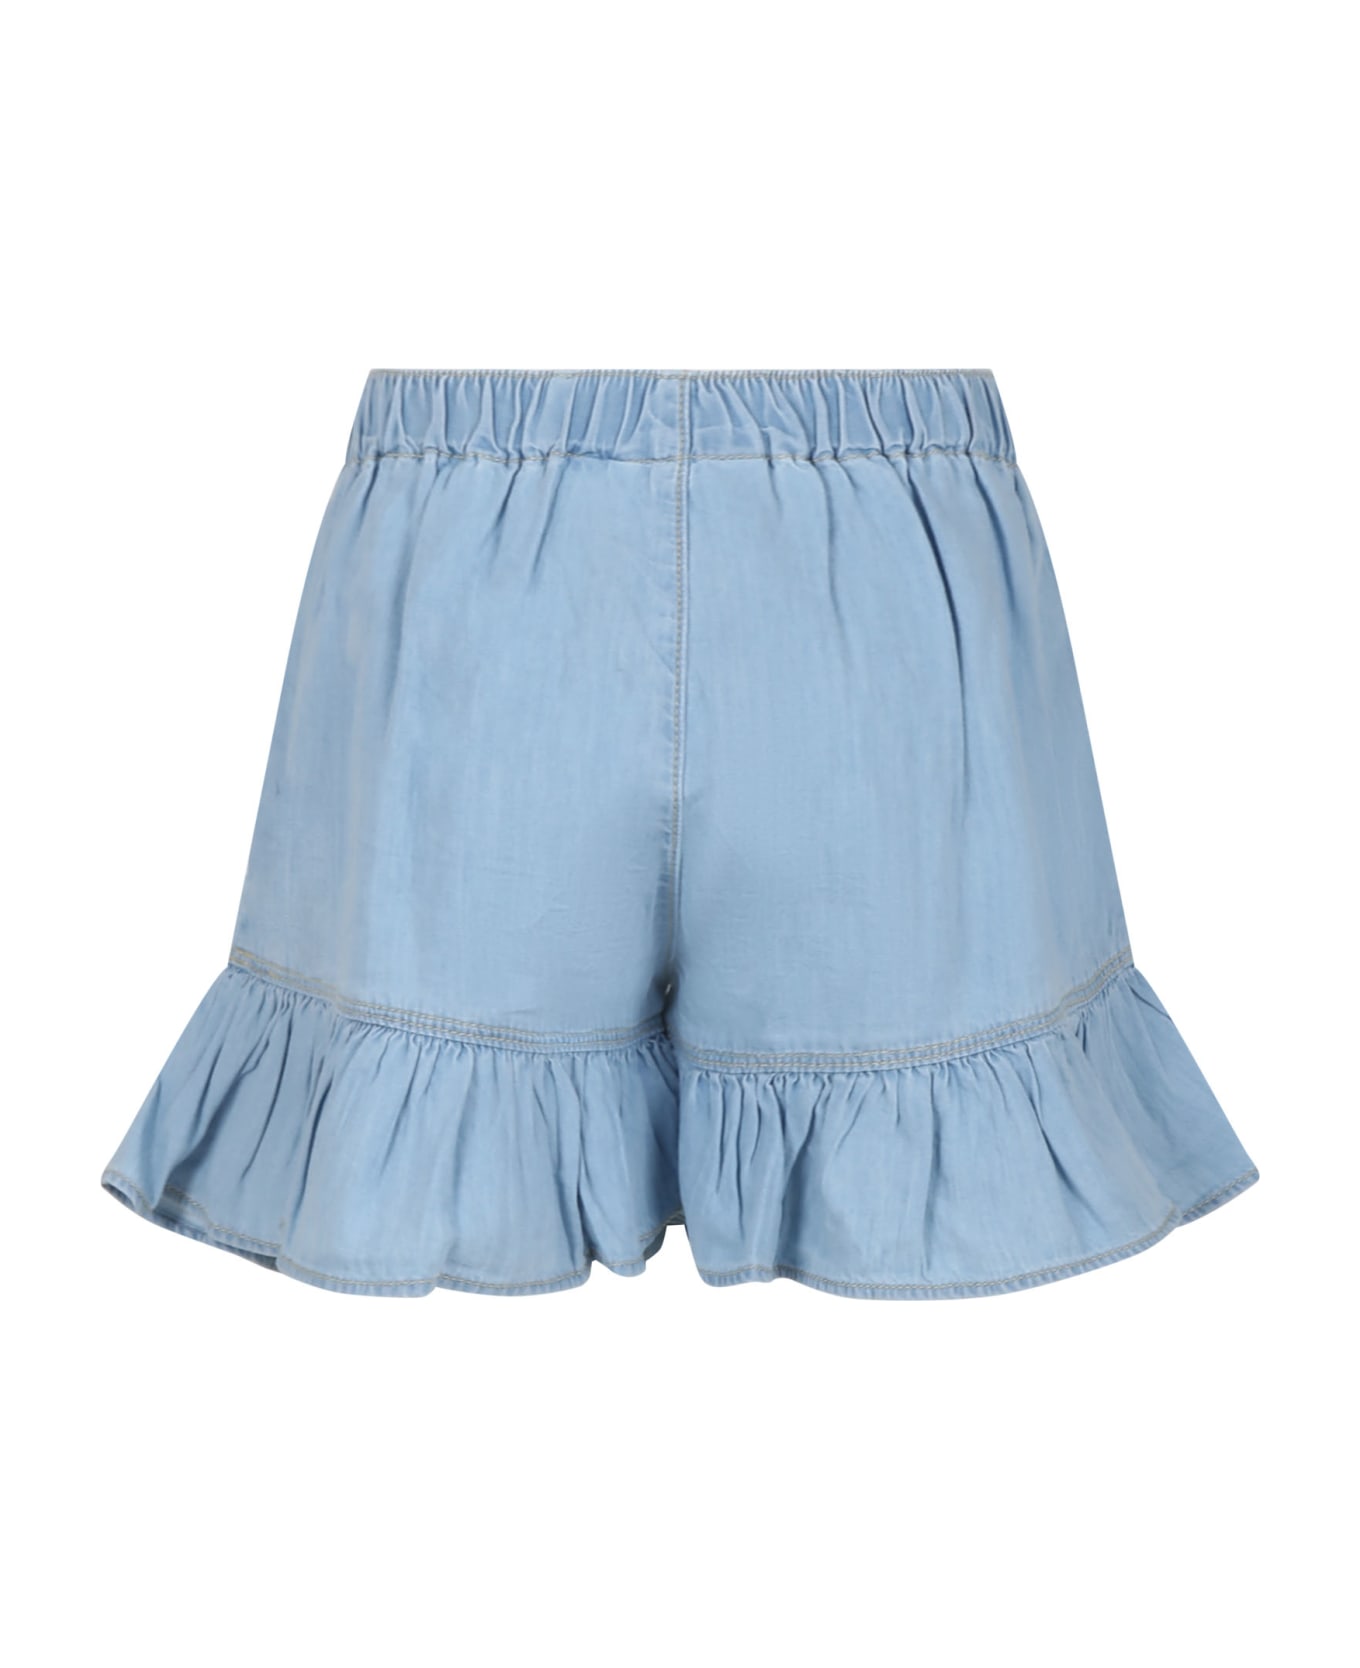 Molo Blue Shorts For Girl - Denim